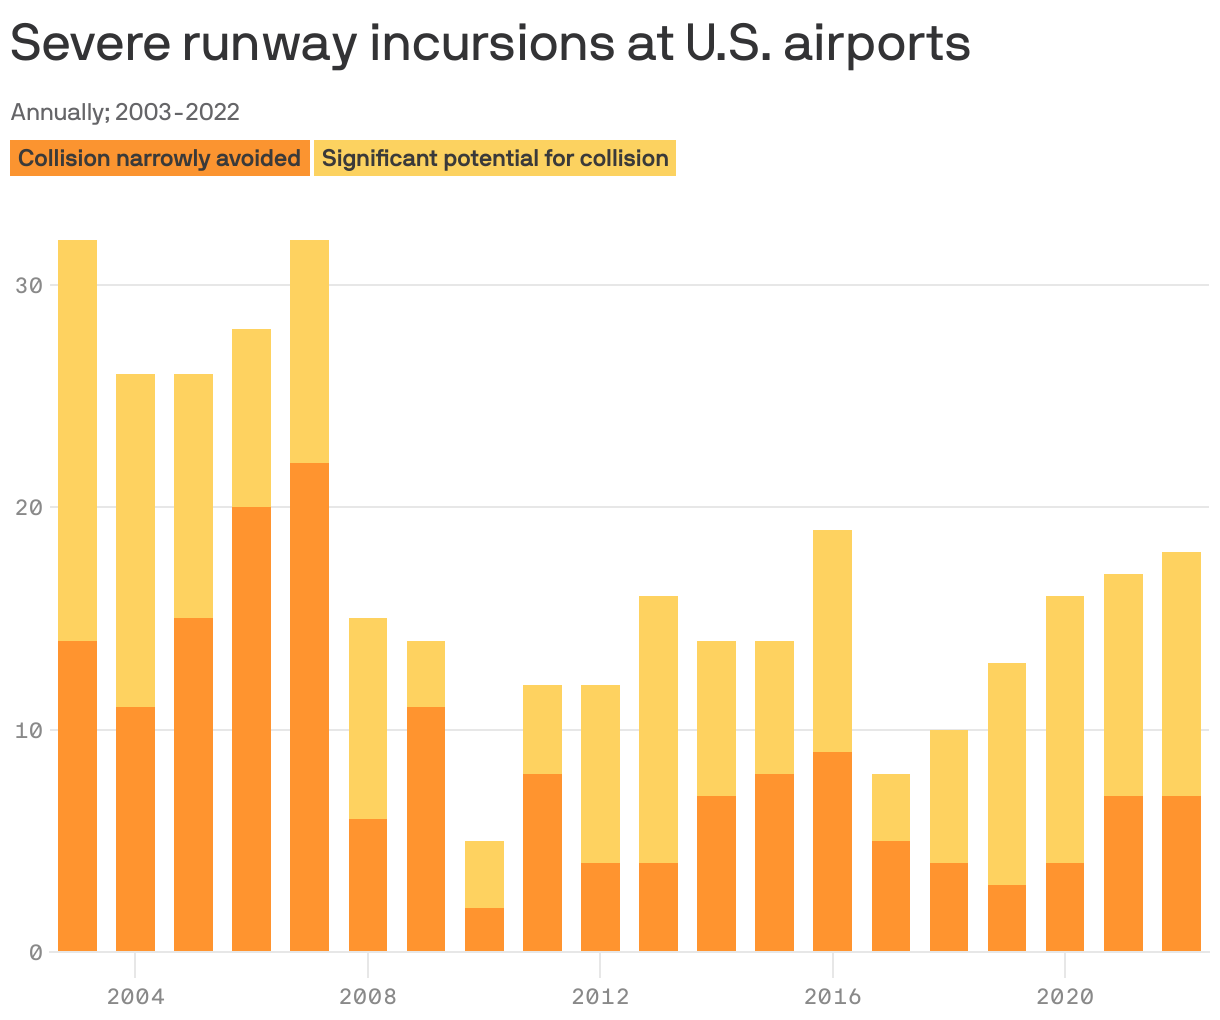 Severe runway incursions at U.S. airports